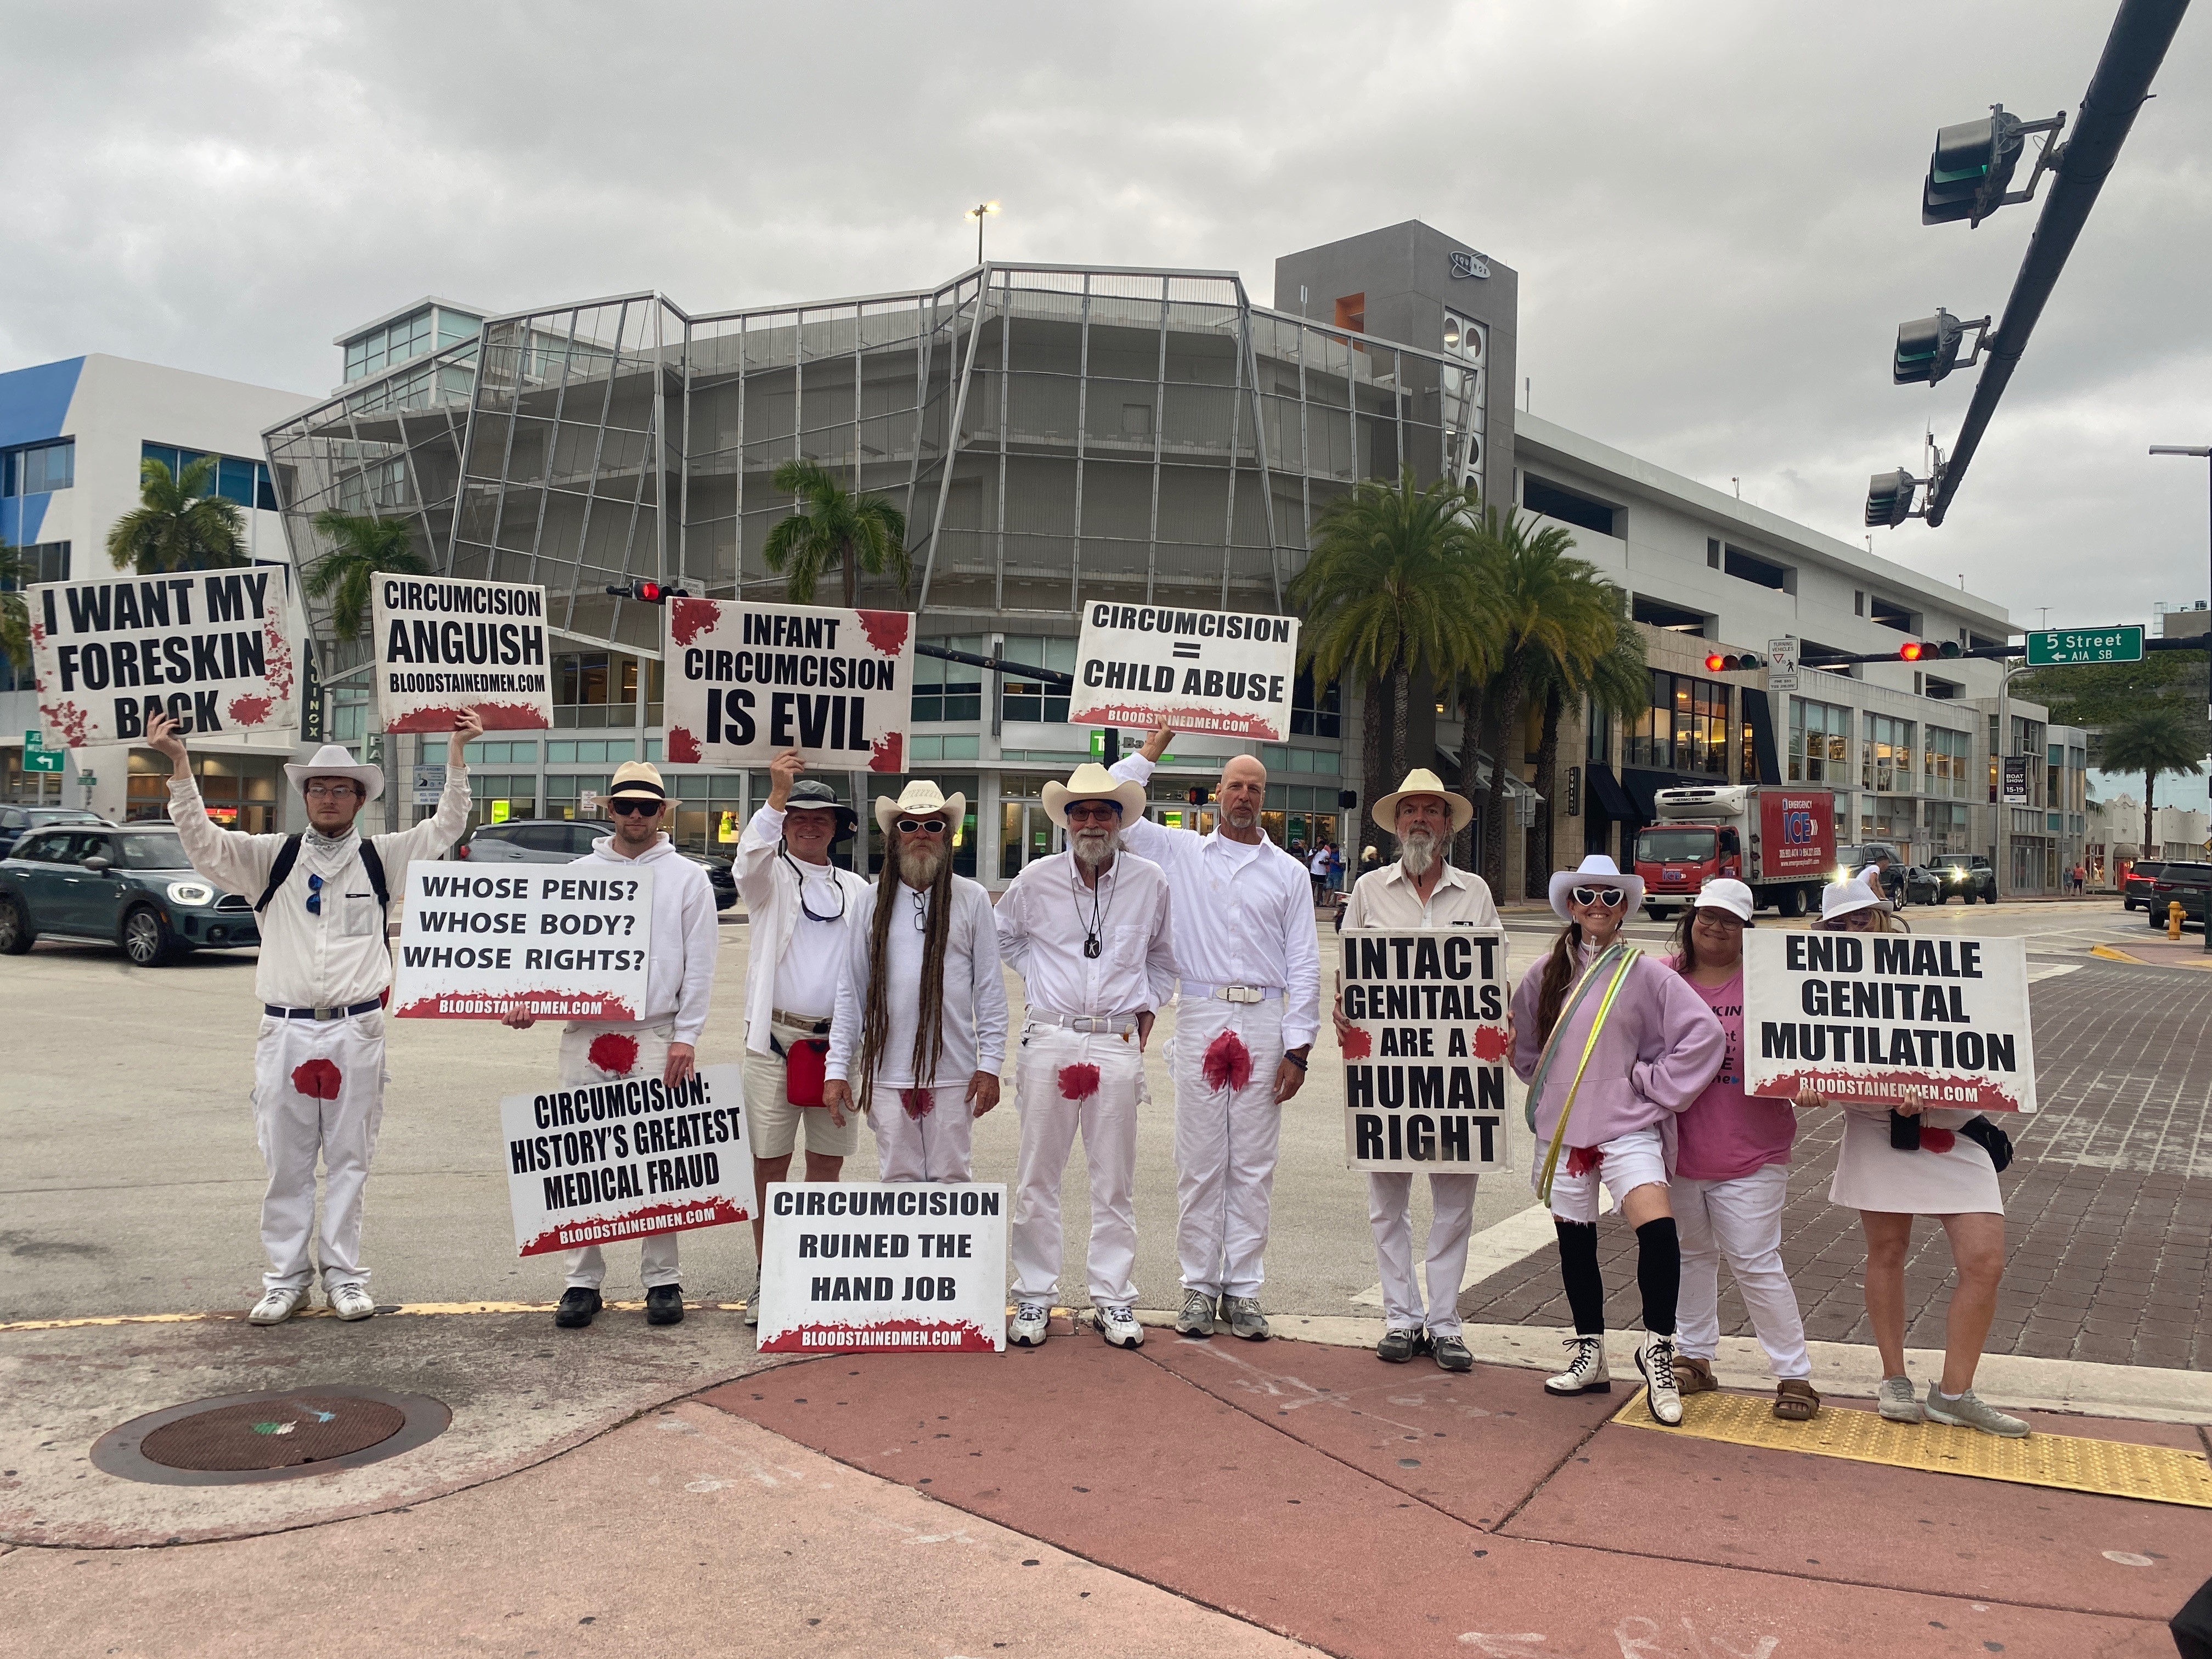 Bloodstained Men Protest Circumcision in Miami Beach Miami New Times image